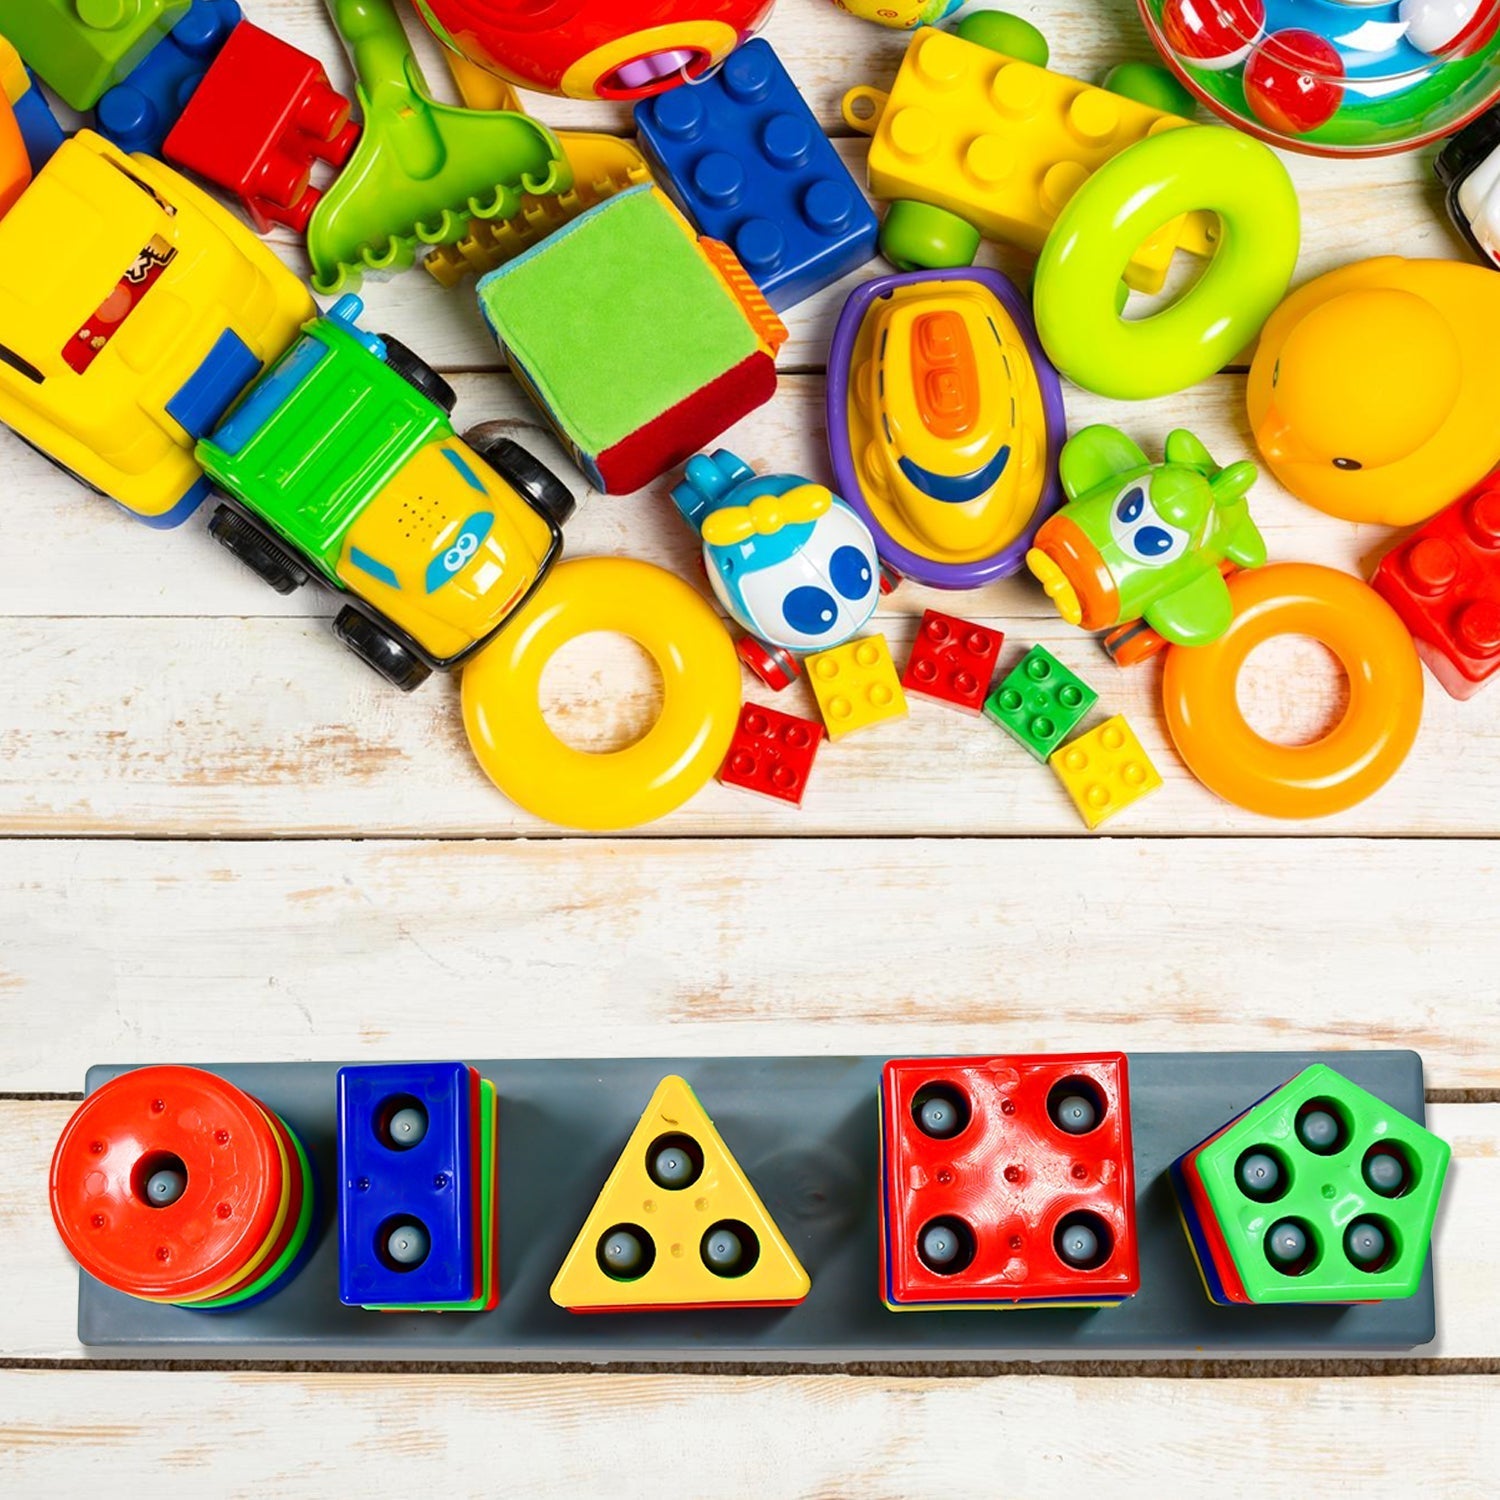 8098 Geometric Brick - 5 Angle Matching Column Blocks for Kids - Preschool Educational Learning Toys. 